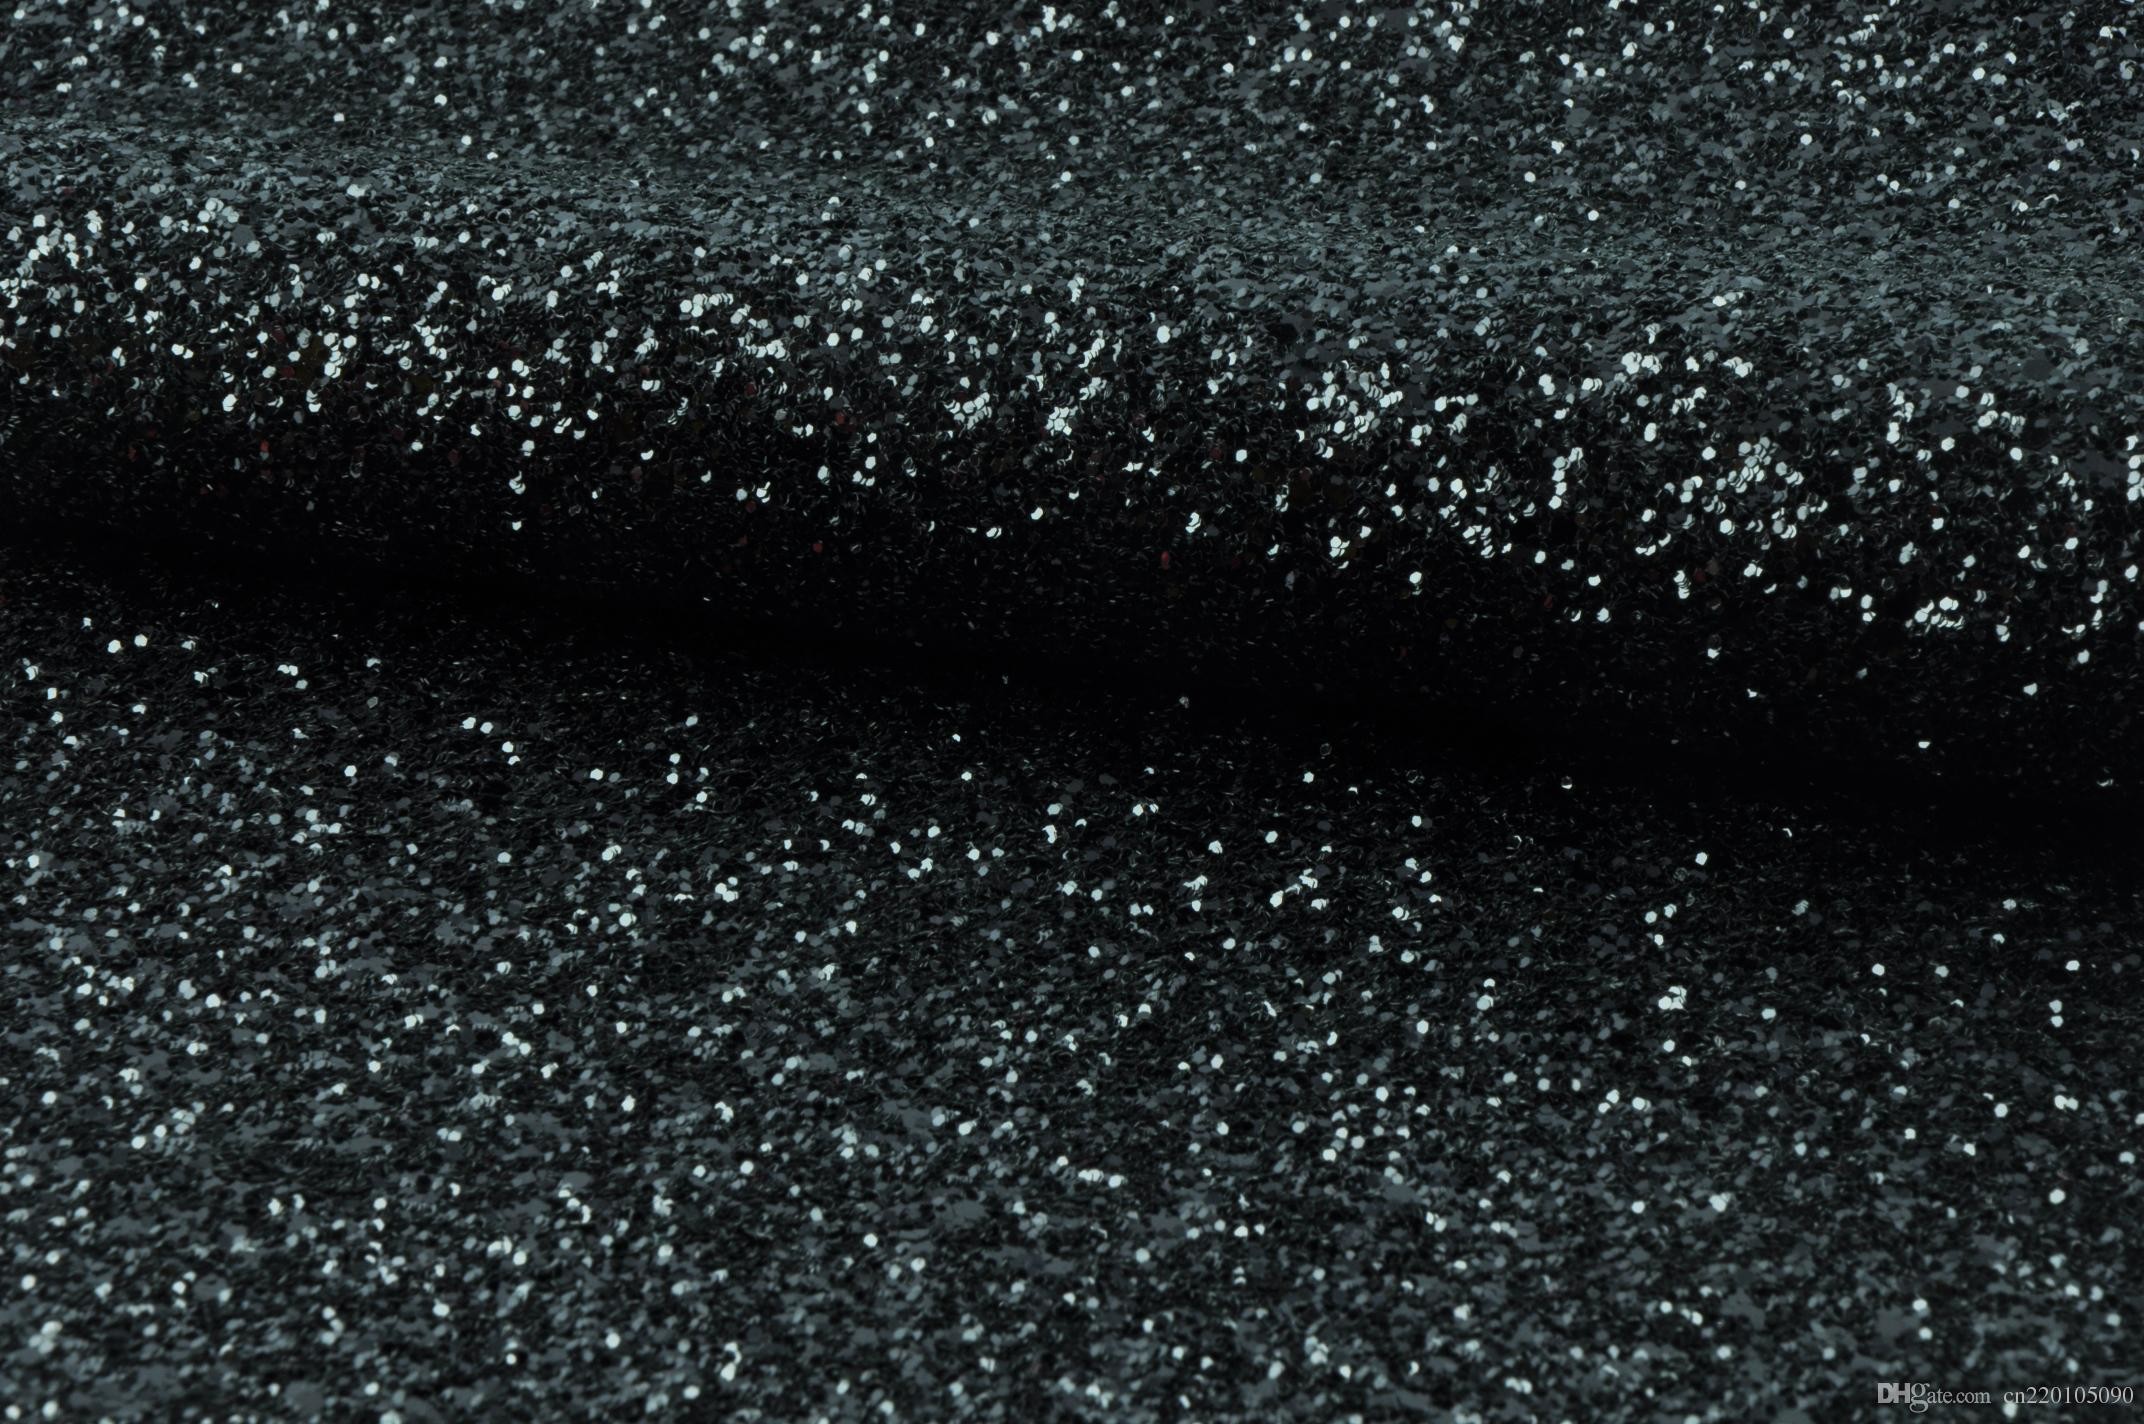 2144x1424, 50 Meter Roll - Bedroom Wallpaper Black Glitter - HD Wallpaper 